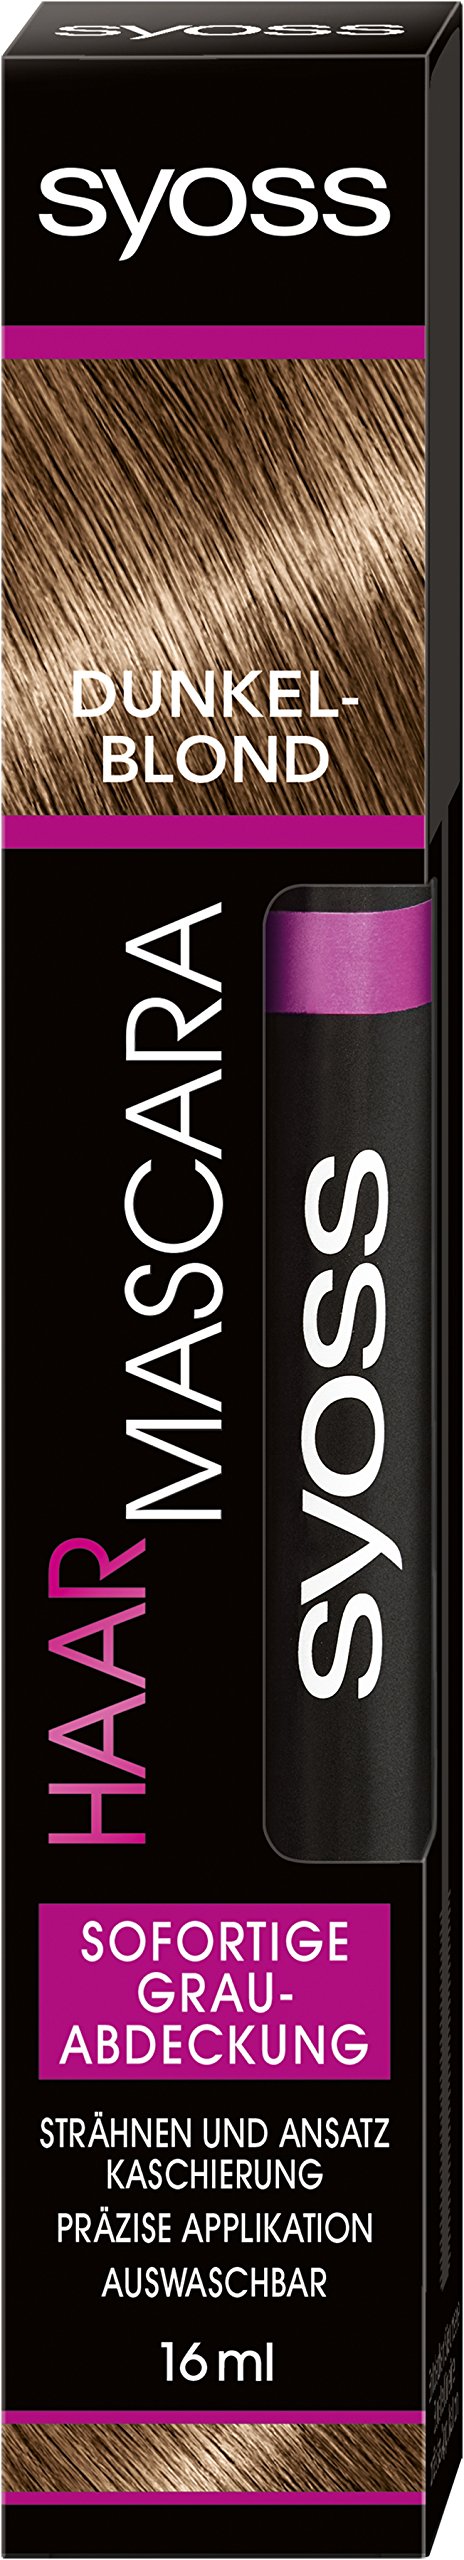 chic  SYOSS Mascara pour cheveux Blond foncé 16 ml dCz4tzwiC en France Online